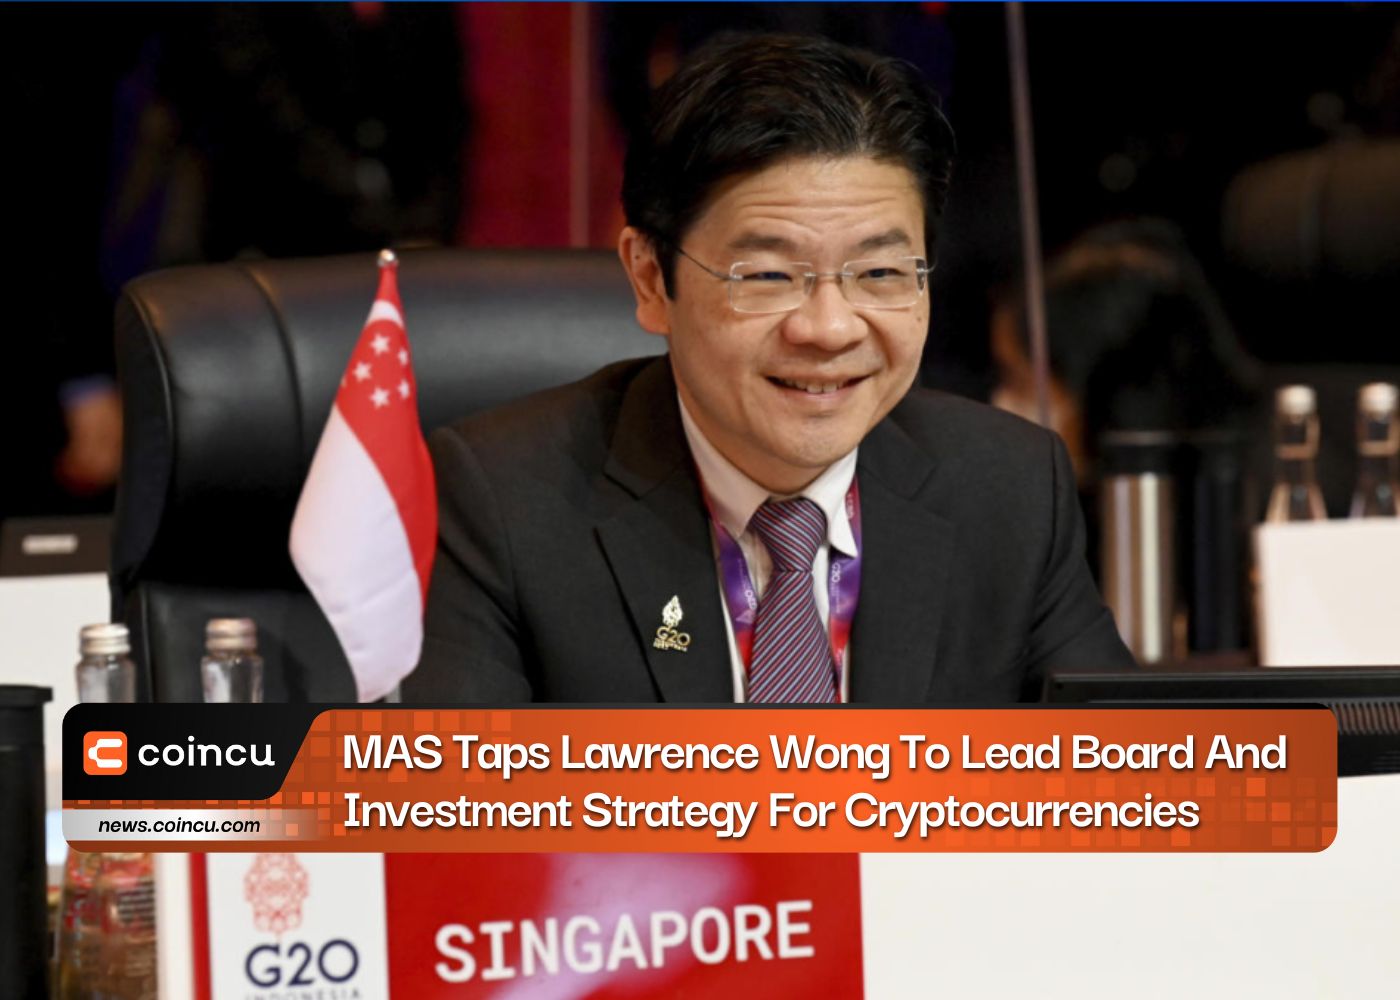 MAS contrata Lawrence Wong para liderar o conselho e a estratégia de investimento para criptomoedas